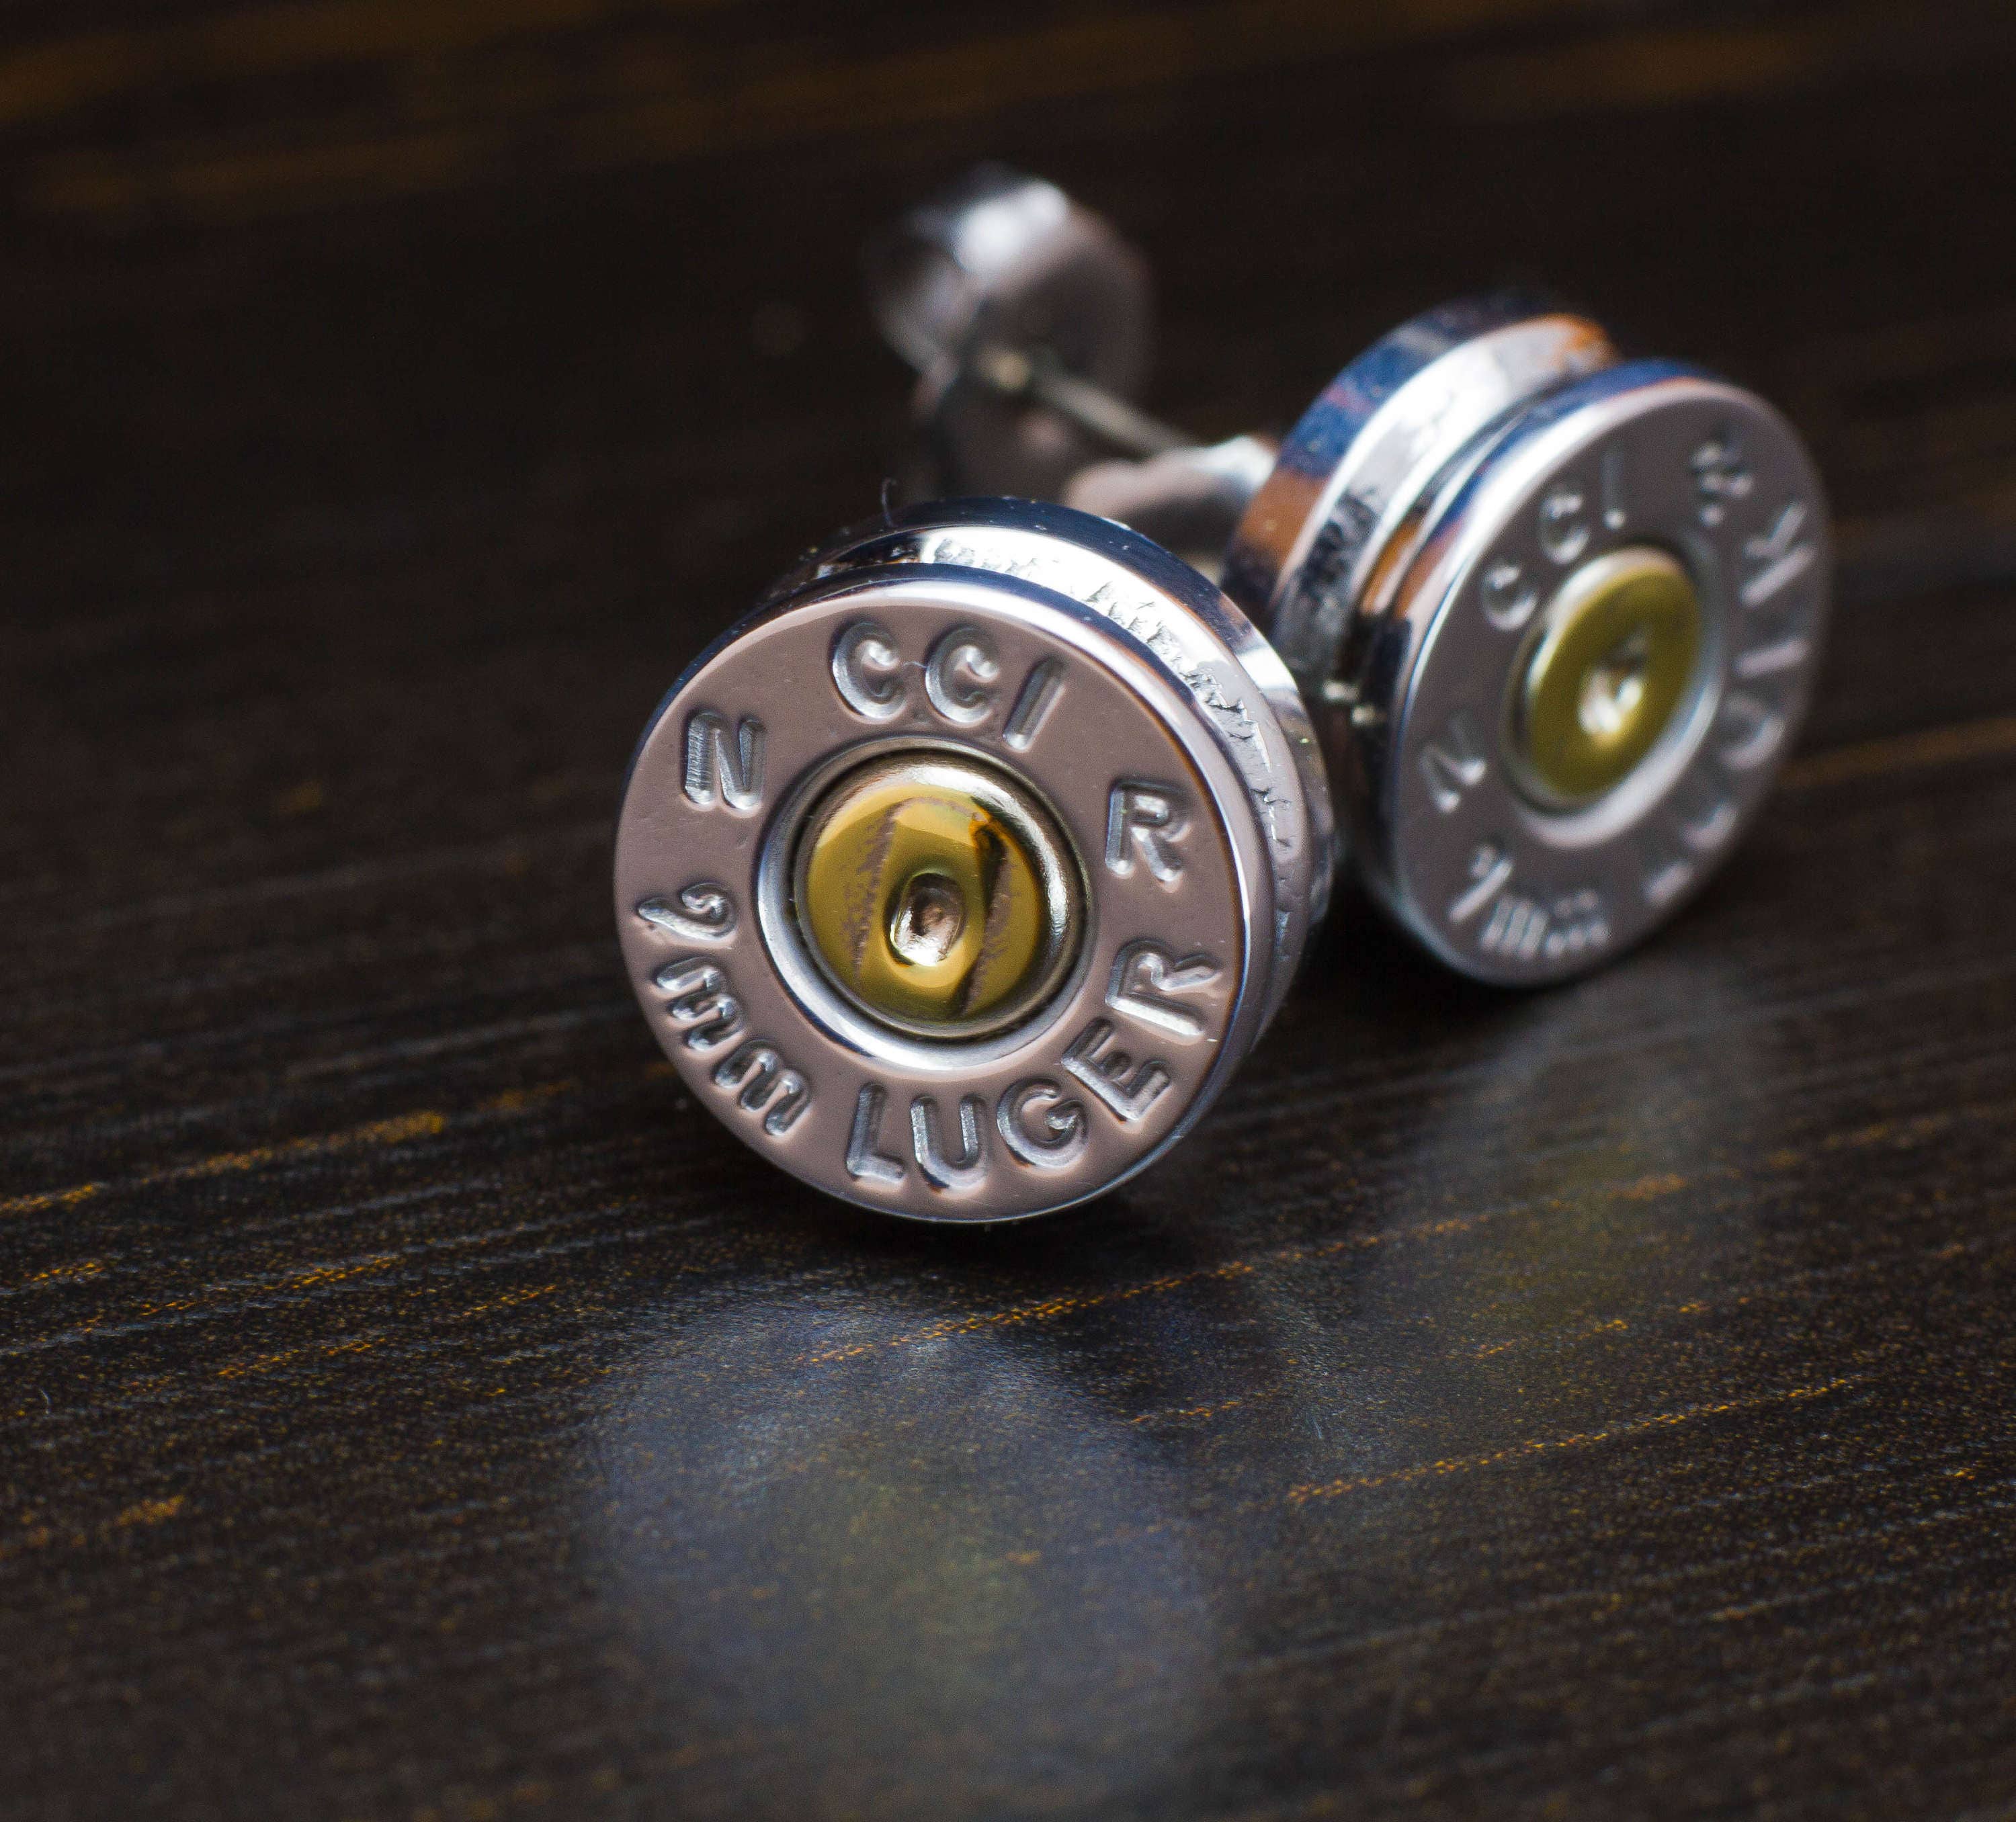 Polishing Cloth for Shotgun and Bullet Casings – SureShot Jewelry